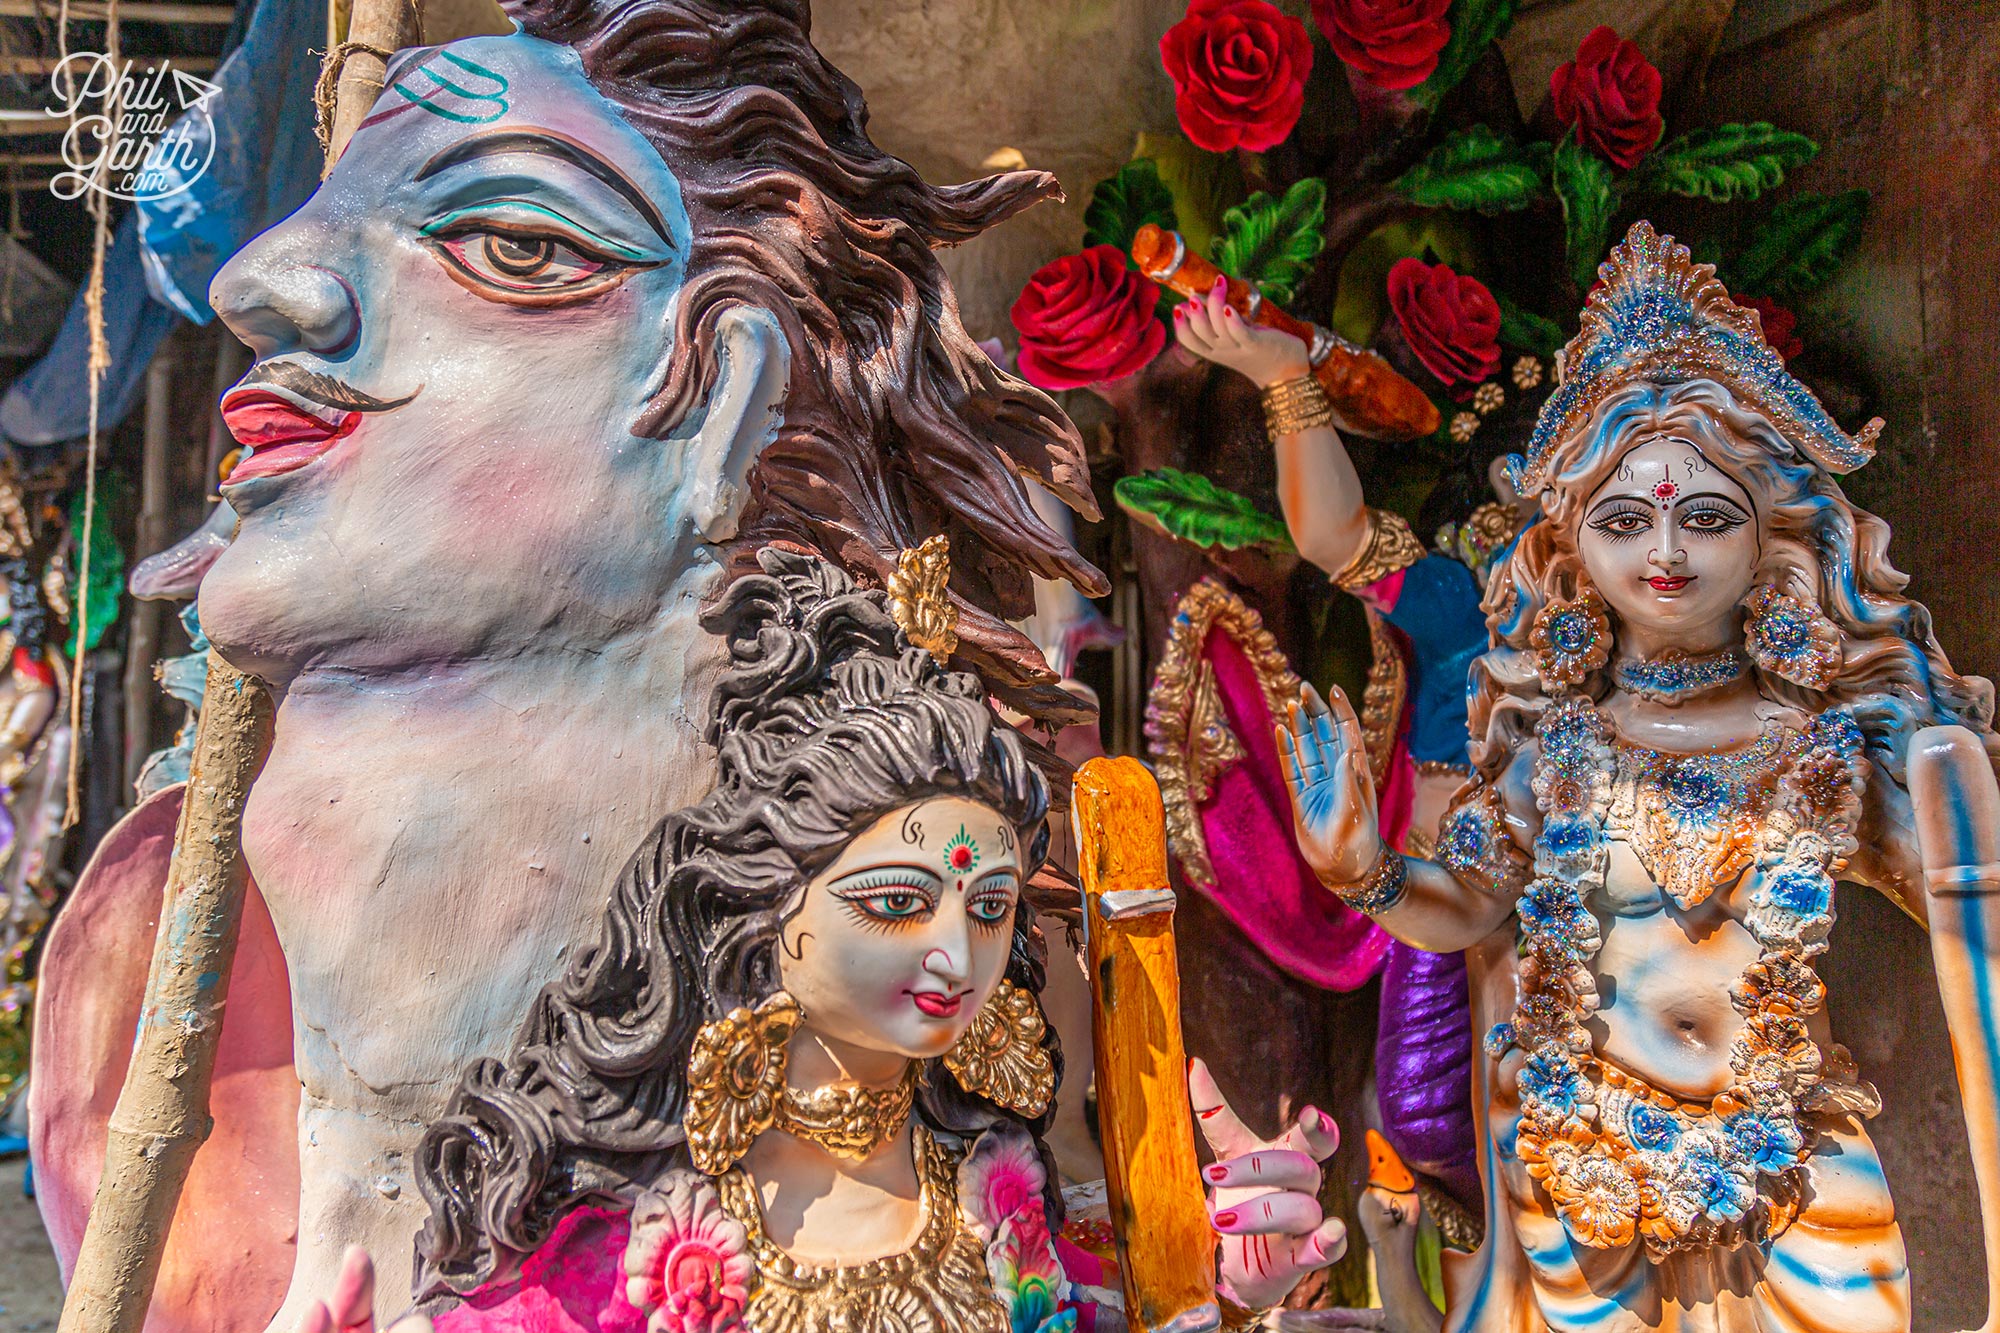 Kolkata's Kumartuli craft neighbourhood is famous for making clay statues of gods and goddesses